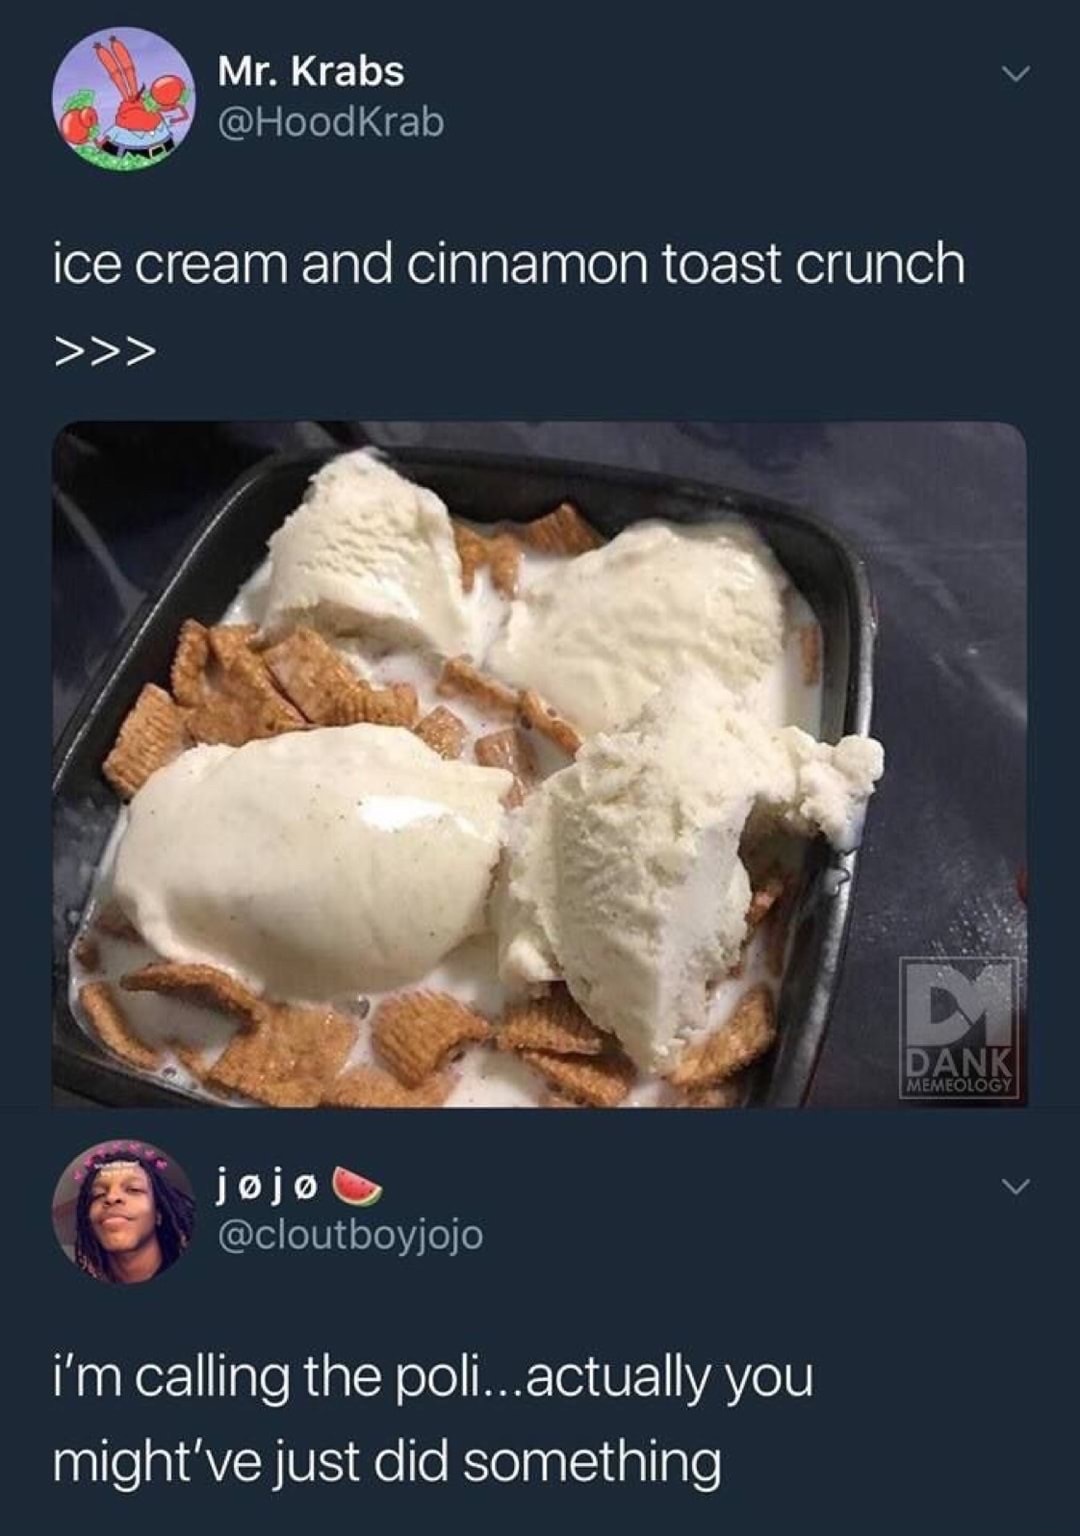 funny meme - cinnamon toast crunch dank meme - Mr. Krabs ice cream and cinnamon toast crunch >>> Dank Memeology joj i'm calling the poli...actually you might've just did something